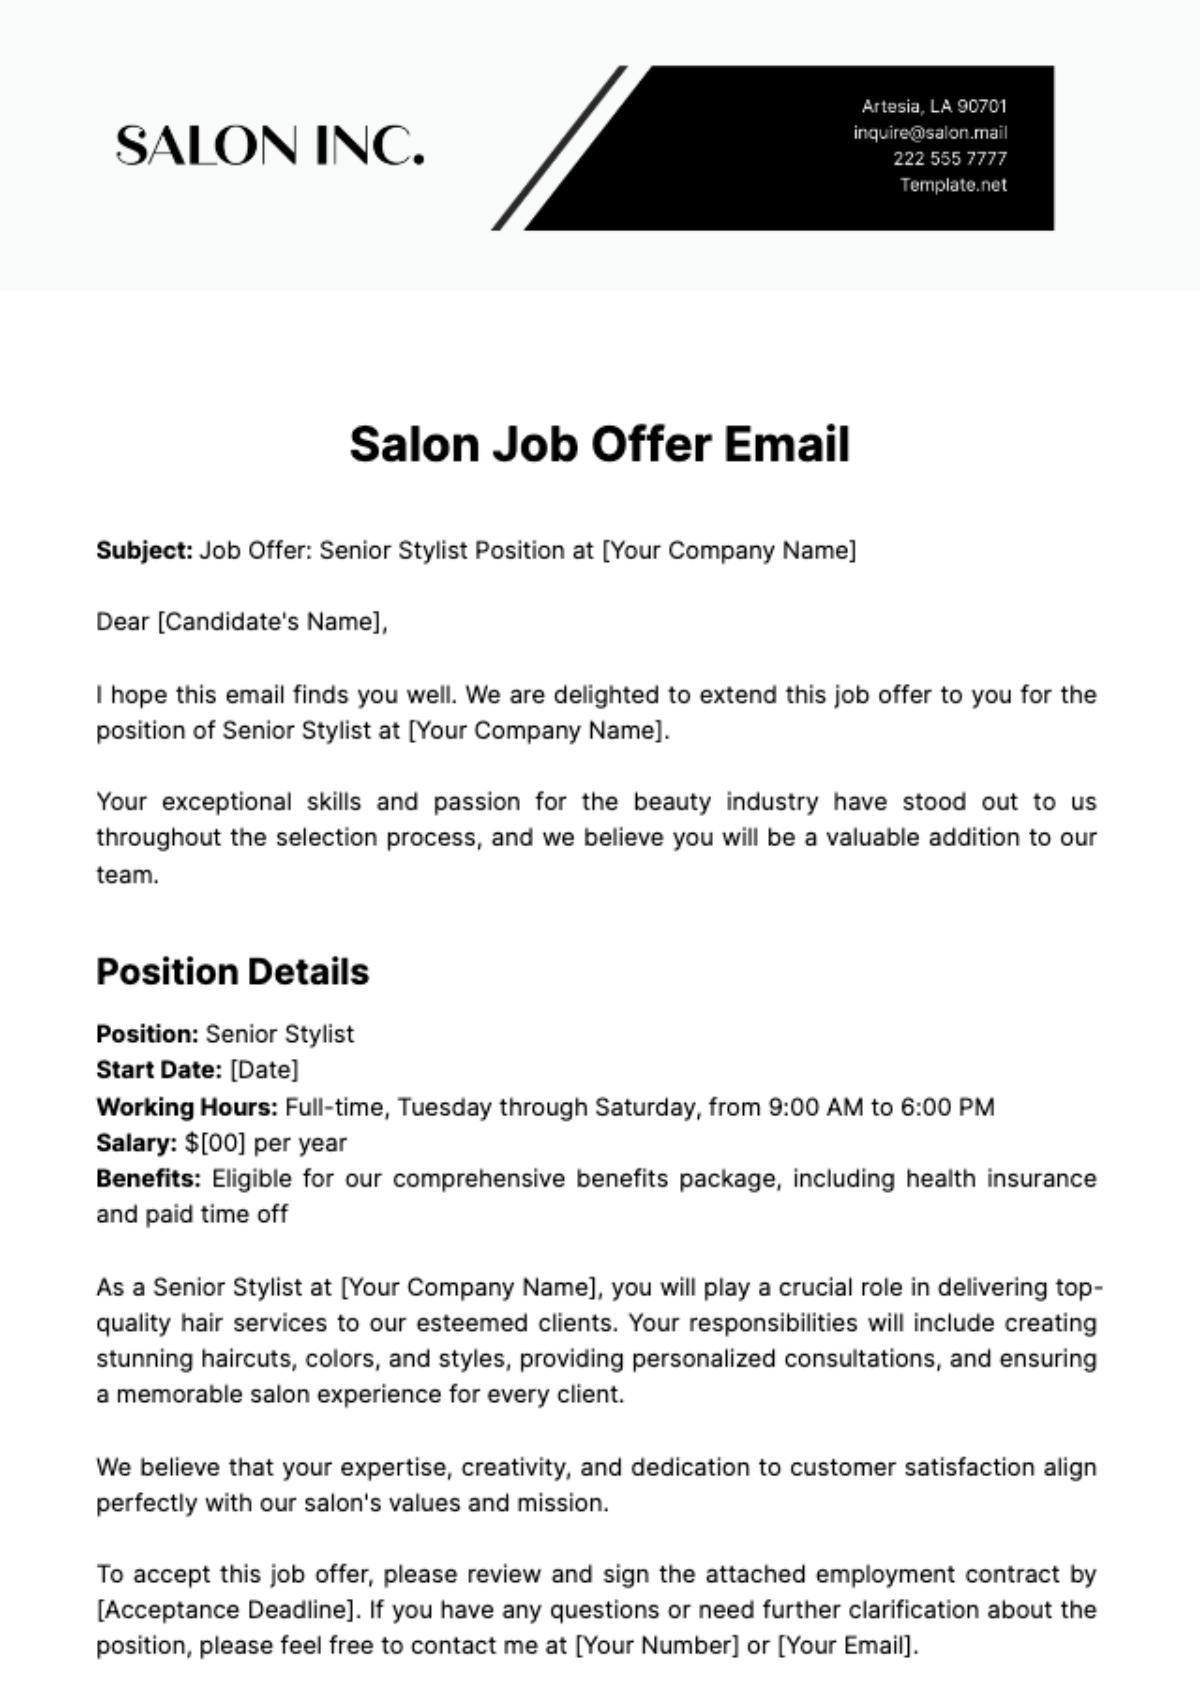 Salon Job Offer Email Template